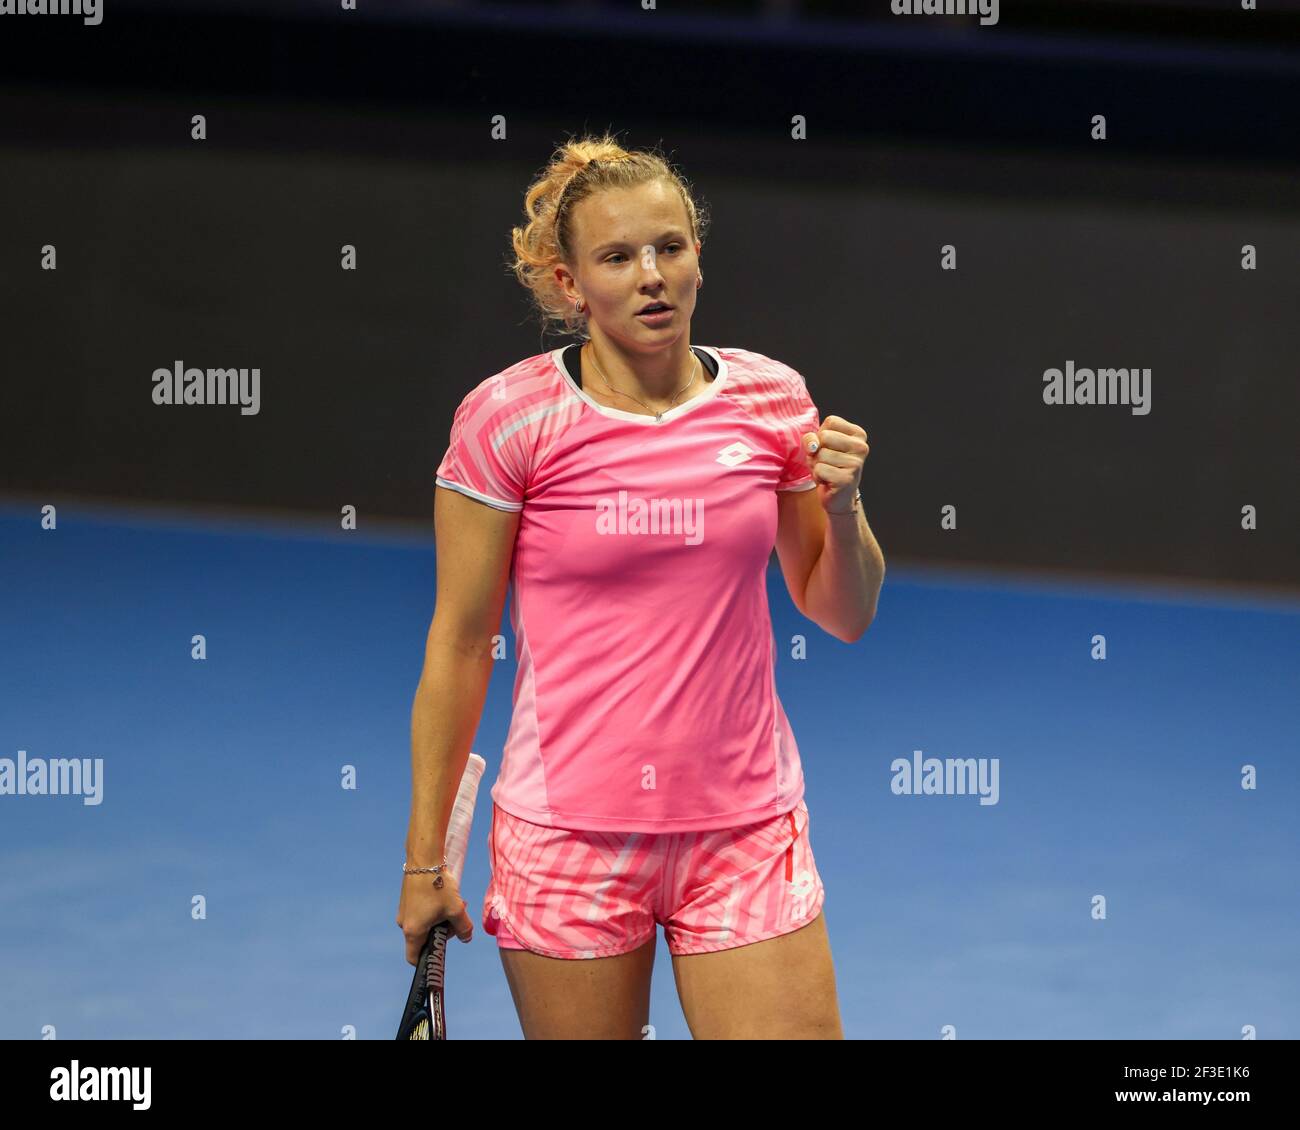 Katerina Siniakova of Czech Republic seen in action during a match against Kirsten Flipkens of Belgium at the St.Petersburg Ladies Trophy 2021 tennis tournament at Sibur Arena